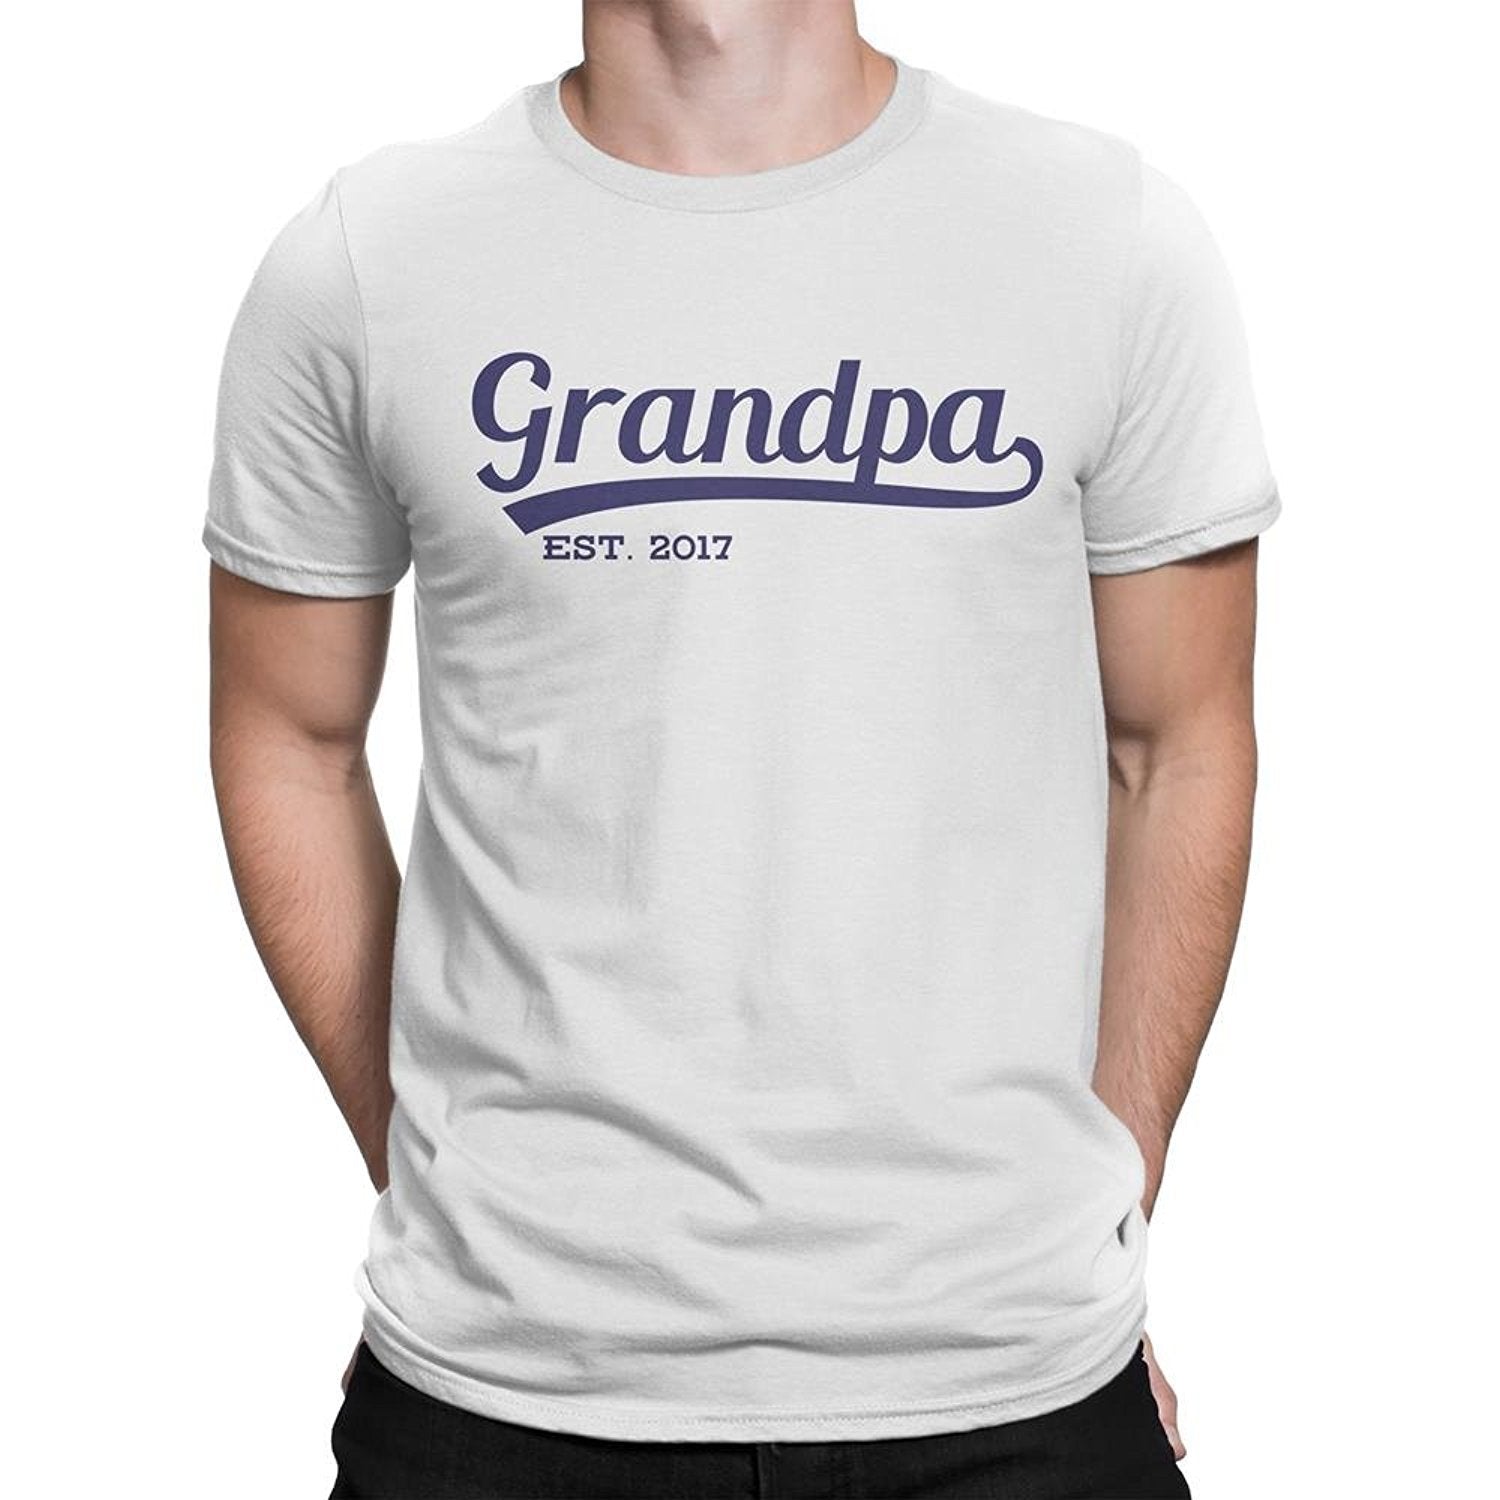 Grandpa Tee Established 2017 Grandfather 1 2017 White